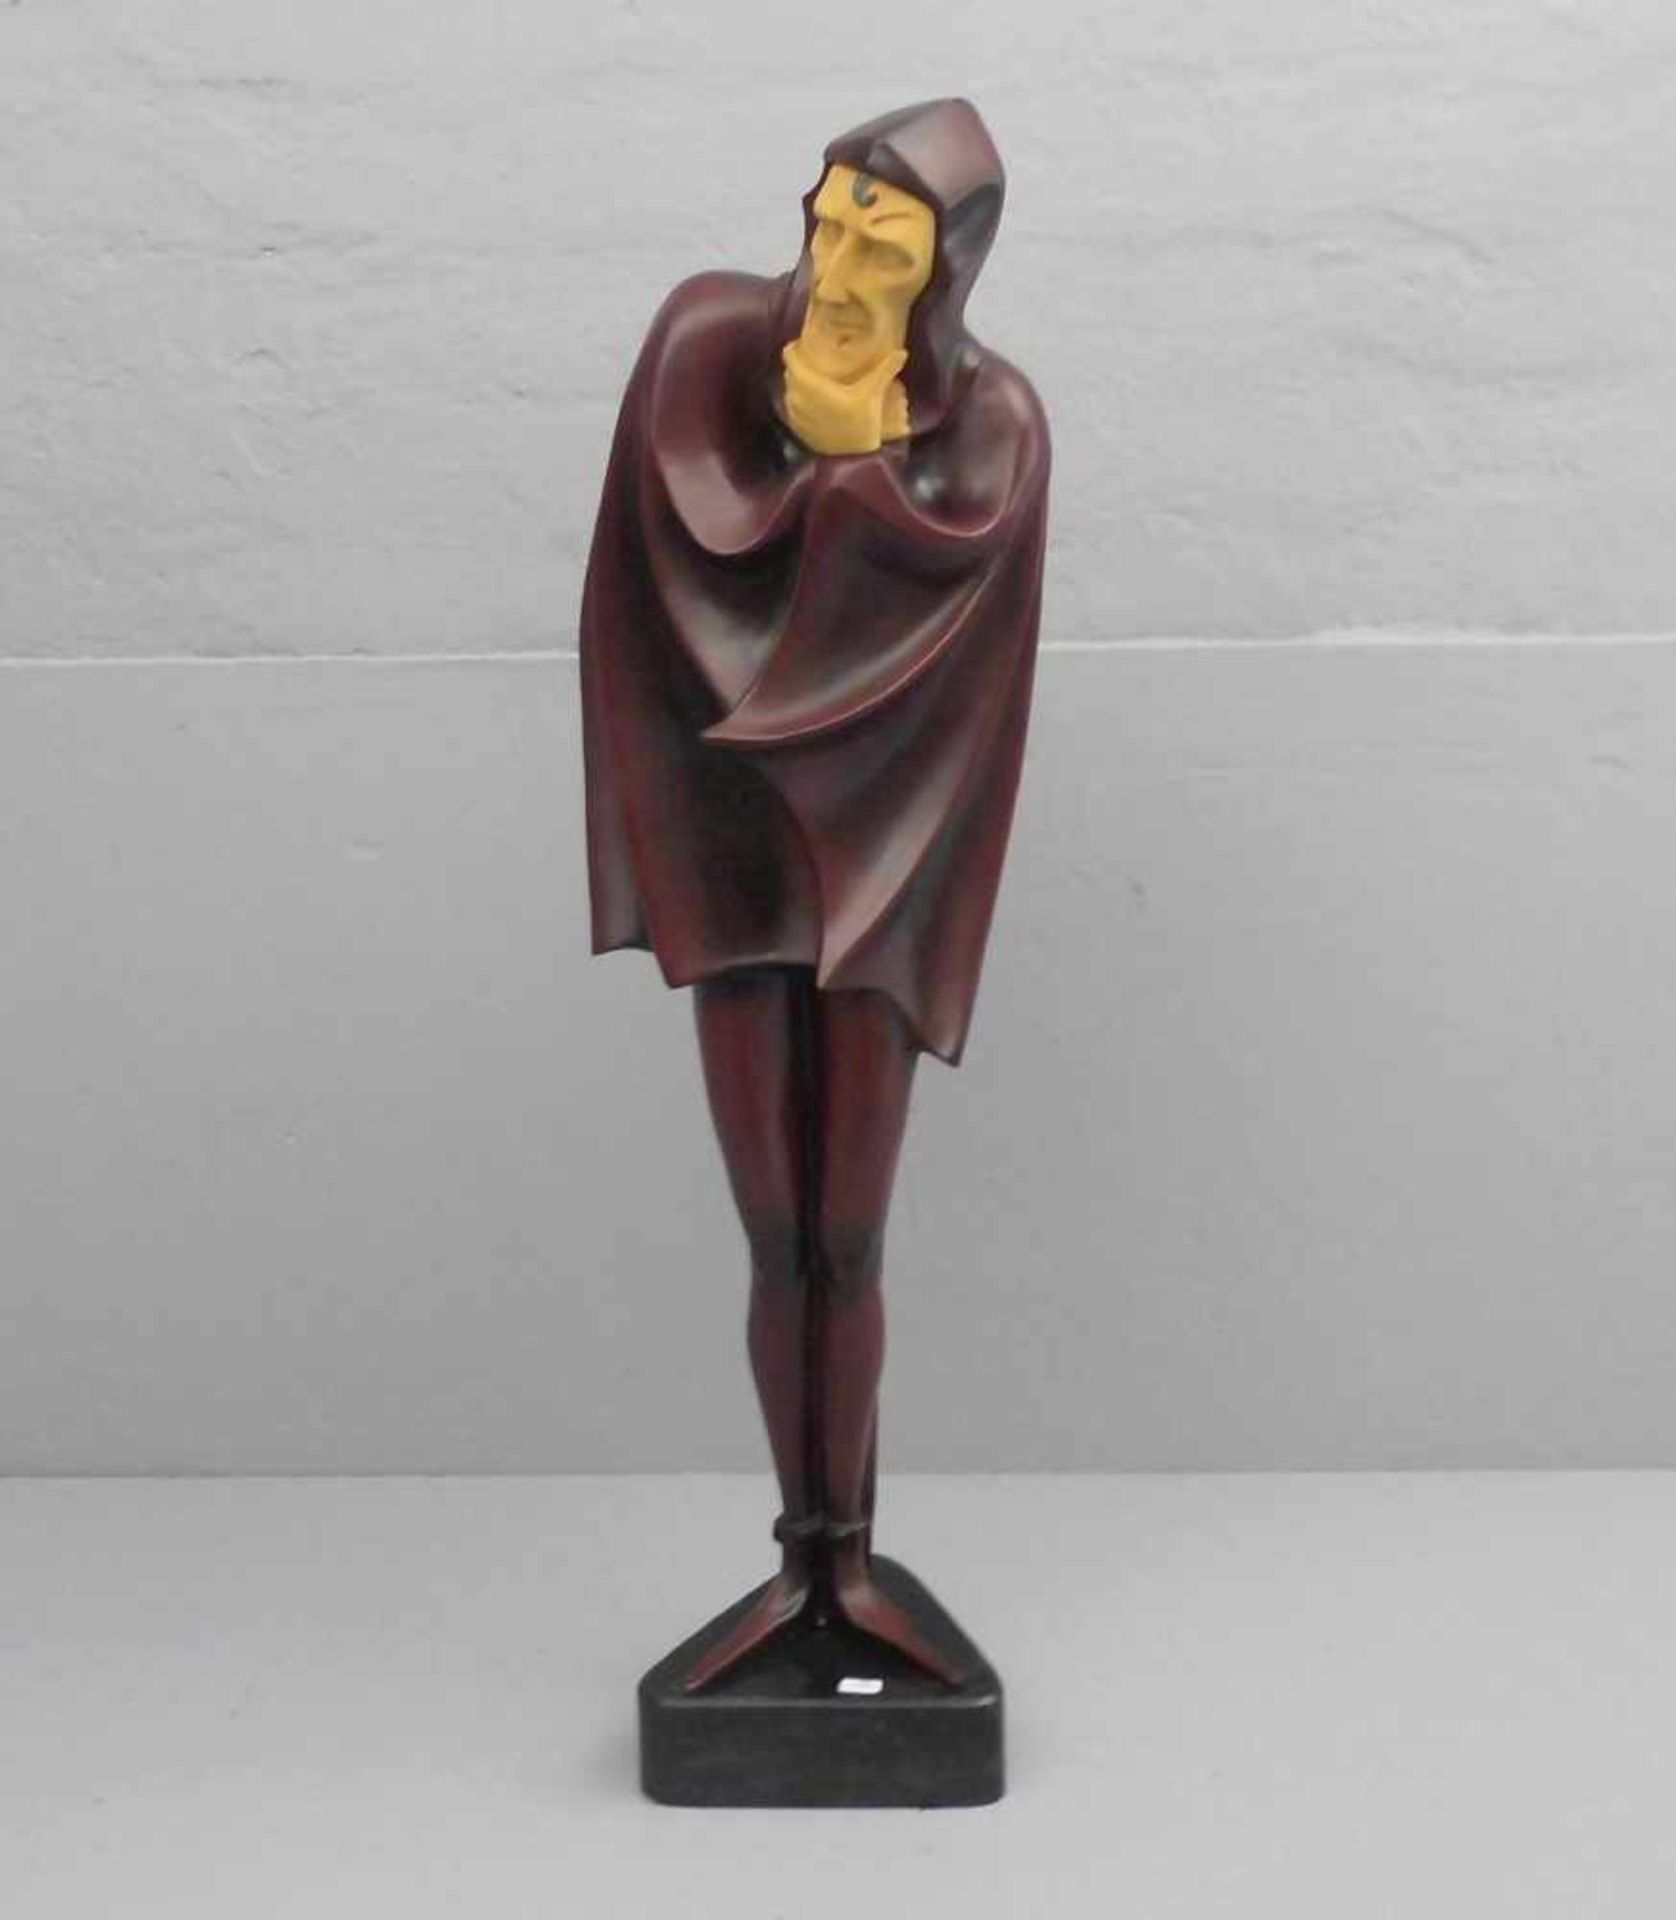 PARIS, RONALD (Wien 1894-1945 Swinemünde), Skulptur / sculpture: "Mephistopheles" / "Mephisto",